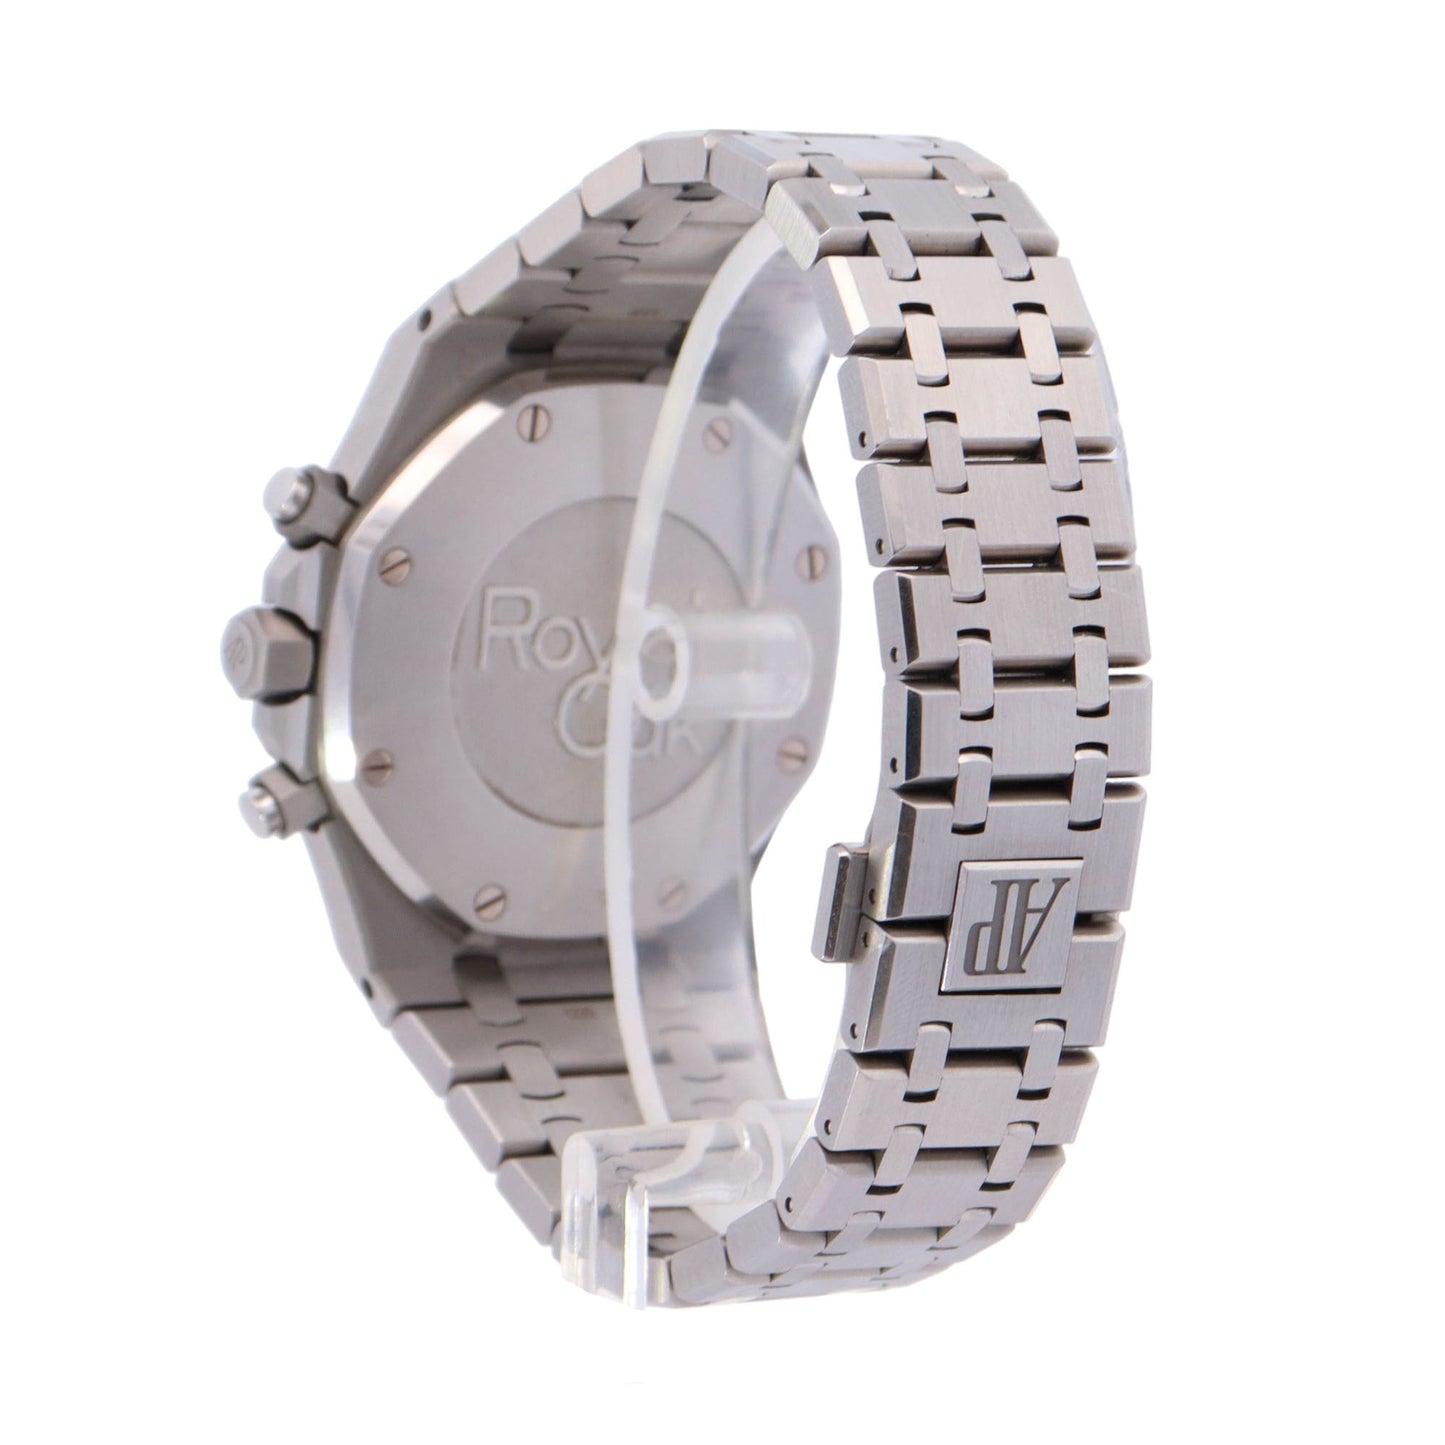 Audemars Piguet Royal Oak Stainless Steel 41mm Black Stick Dial Watch Reference# 26331ST.OO.1220ST.02 - Happy Jewelers Fine Jewelry Lifetime Warranty